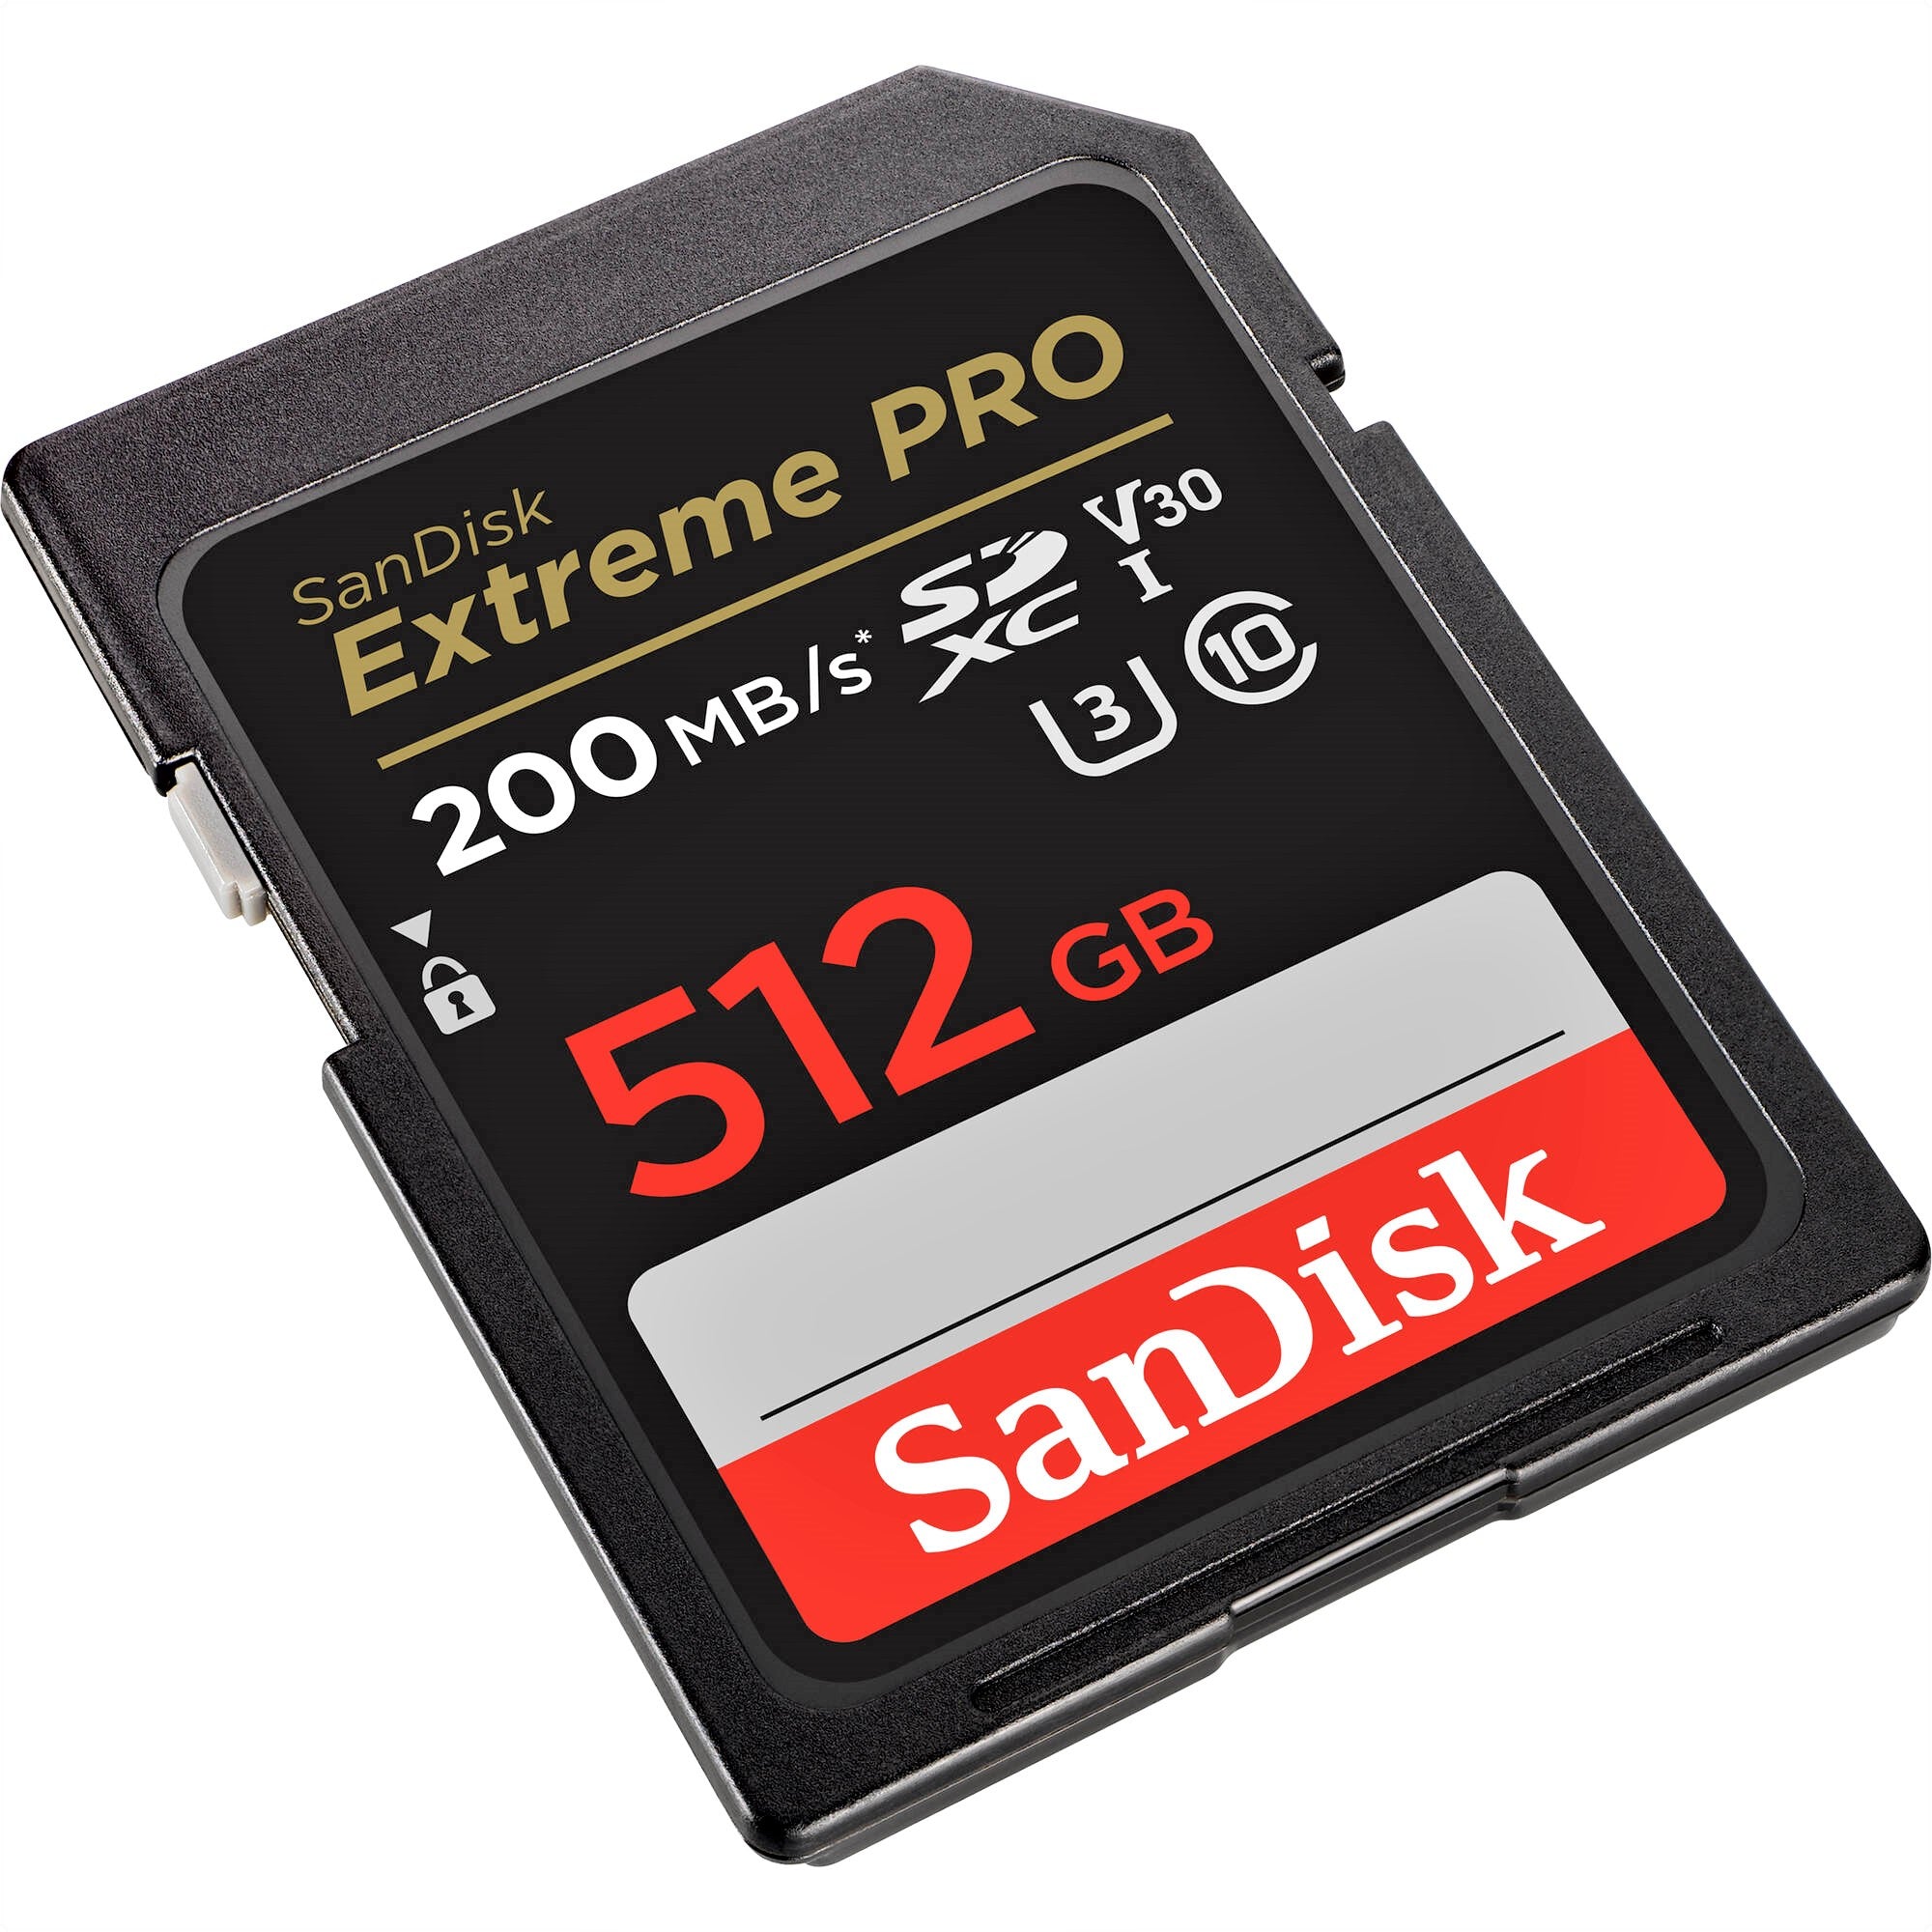 SanDisk 512GB Extreme PRO UHS-I SDHC Memory Card